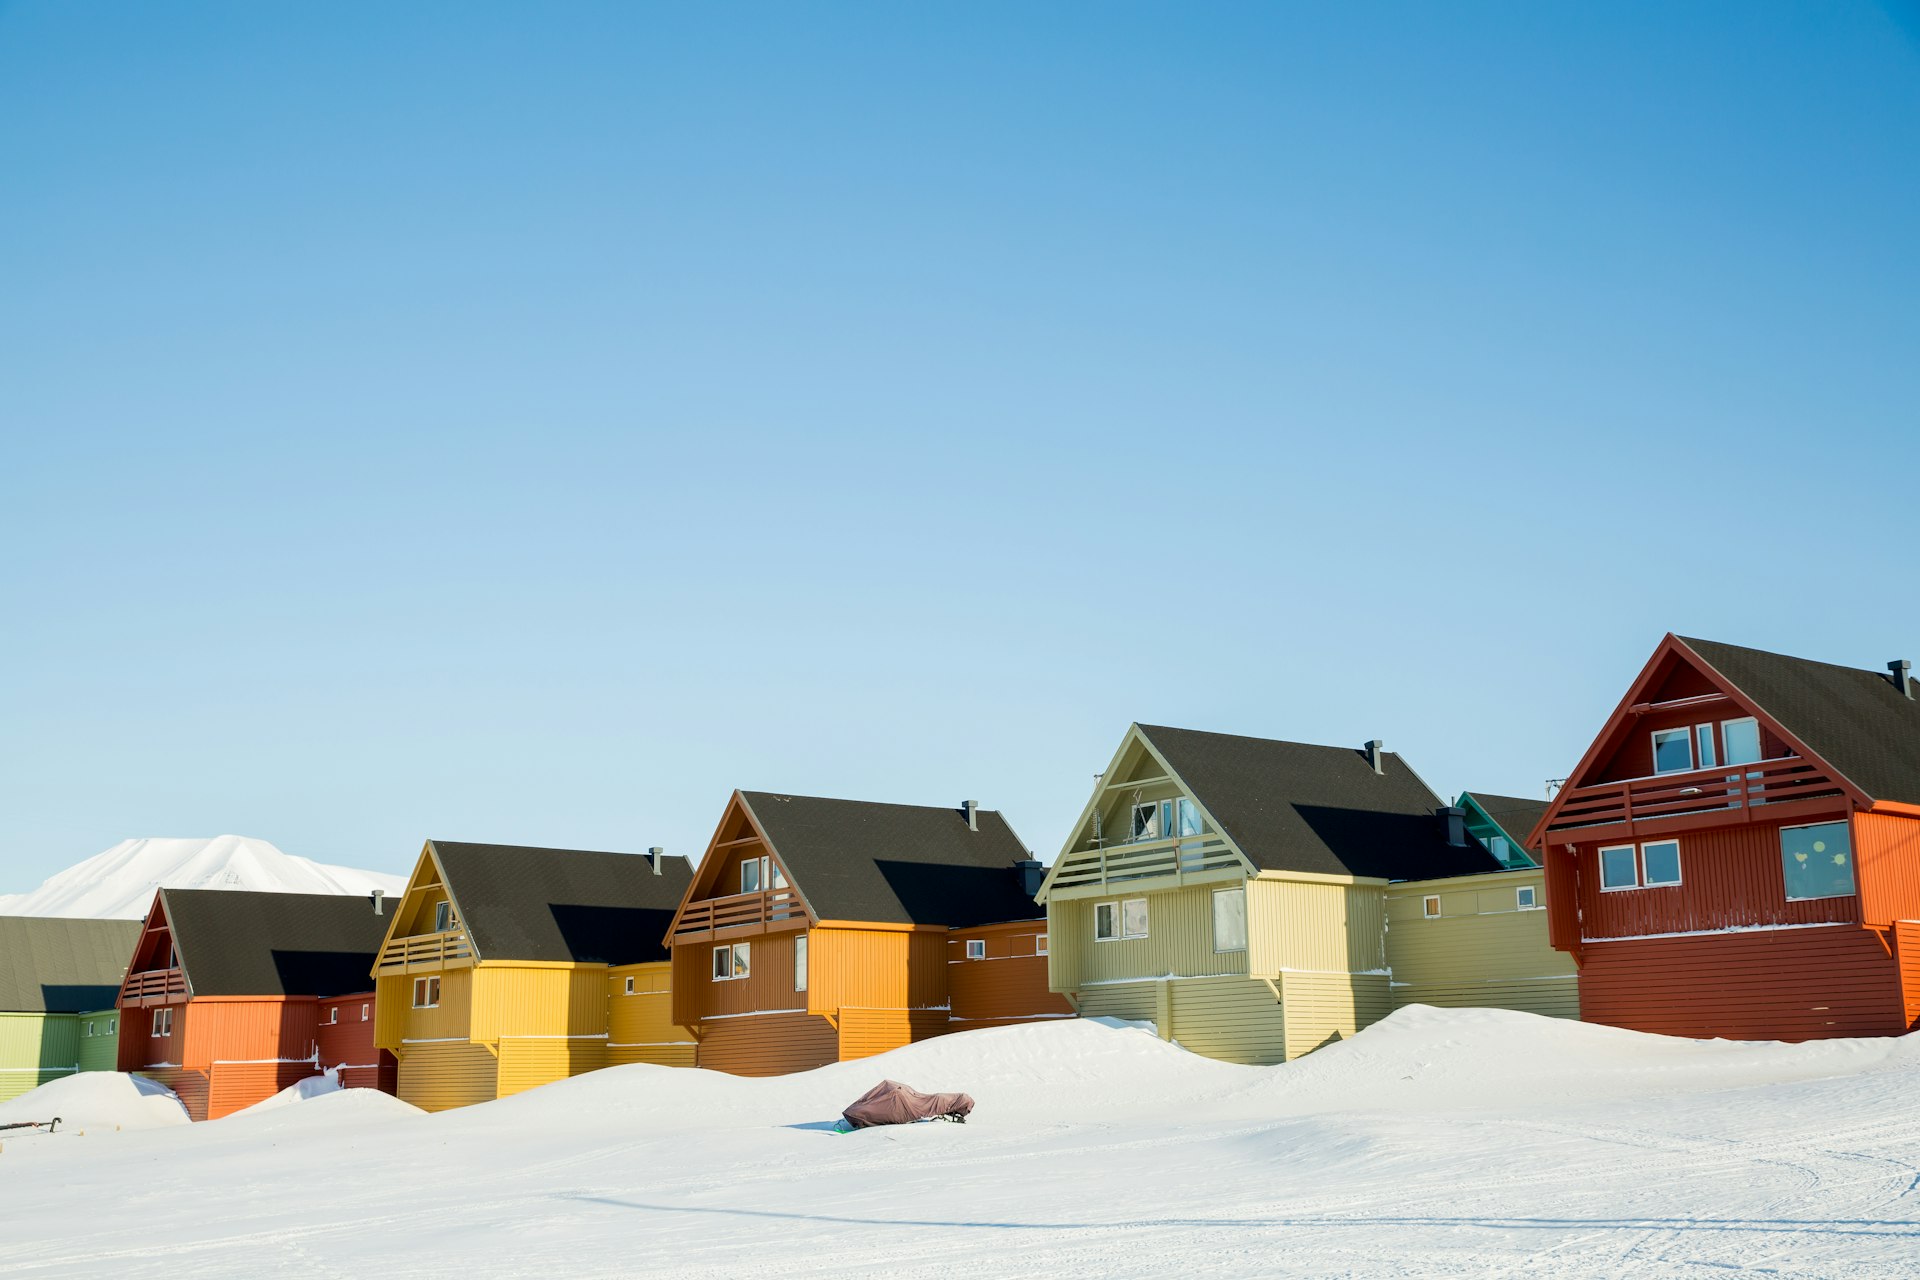 Houses in Longyearbyen in the snow, Svalbard